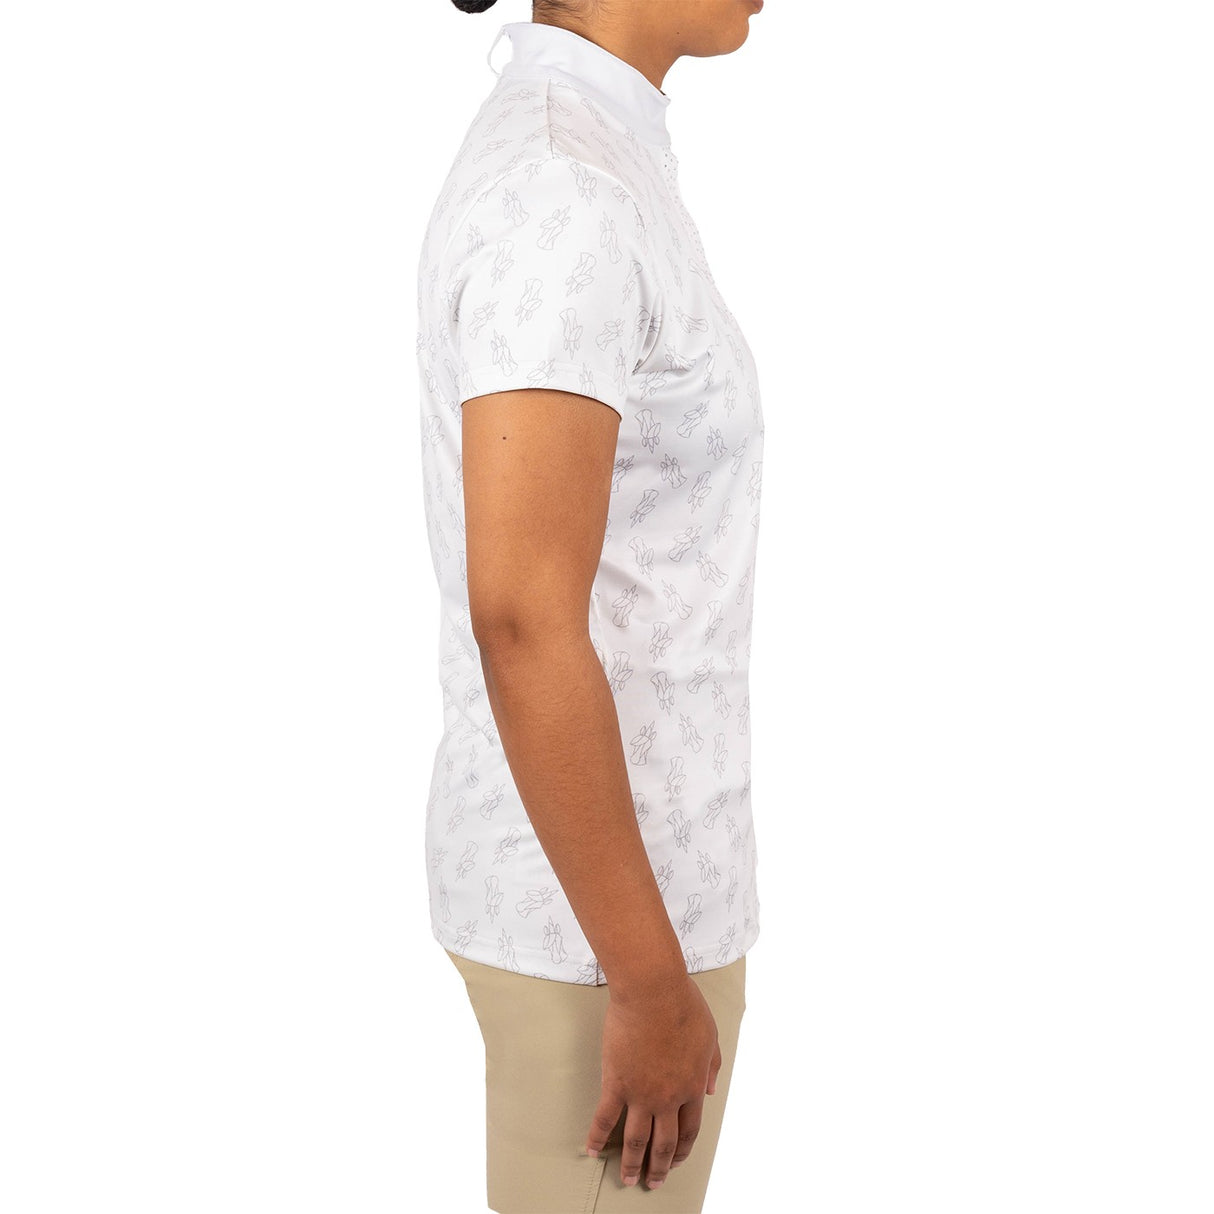 Elation Platinum Payton Short Sleeve Show Shirt